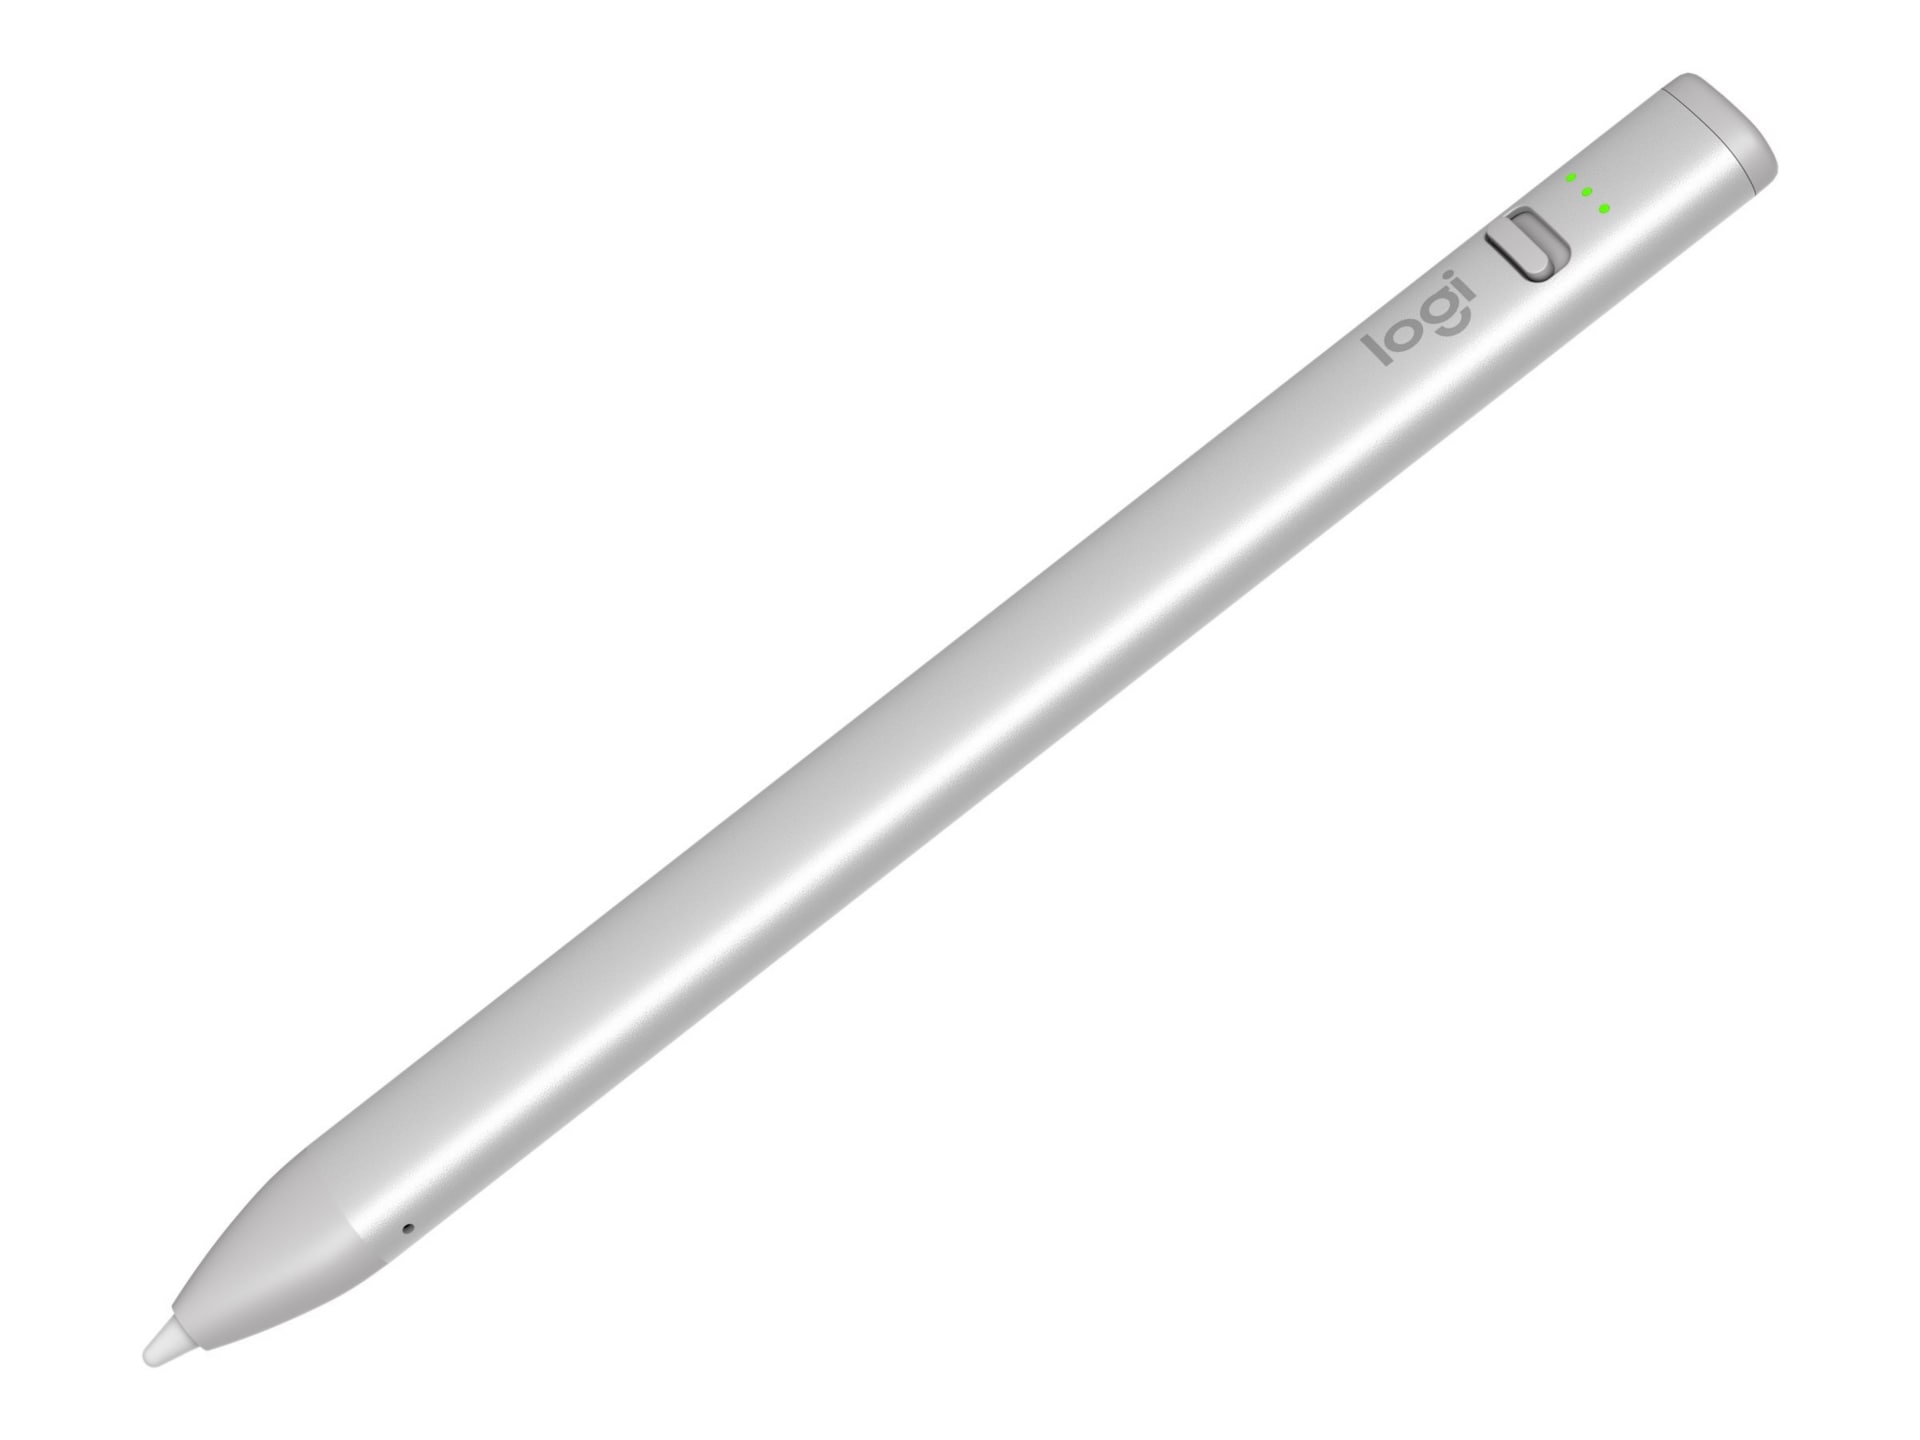 Logitech Crayon digital pencil for iPad (iPads with USB-C ports) - digital